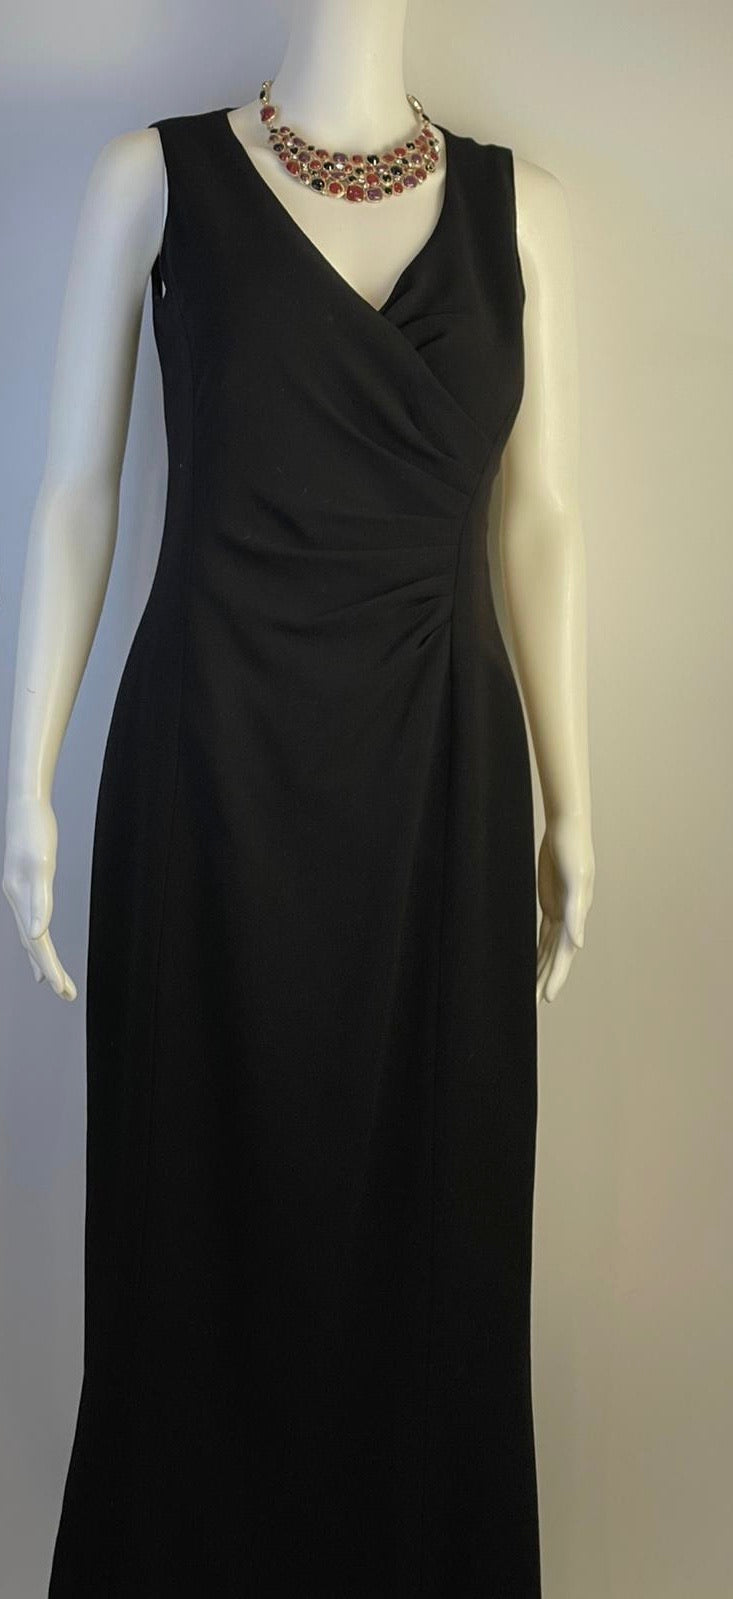 97P 1997 Vintage Chanel Sleeveless Black Maxi Dress FR 40 US 4/6